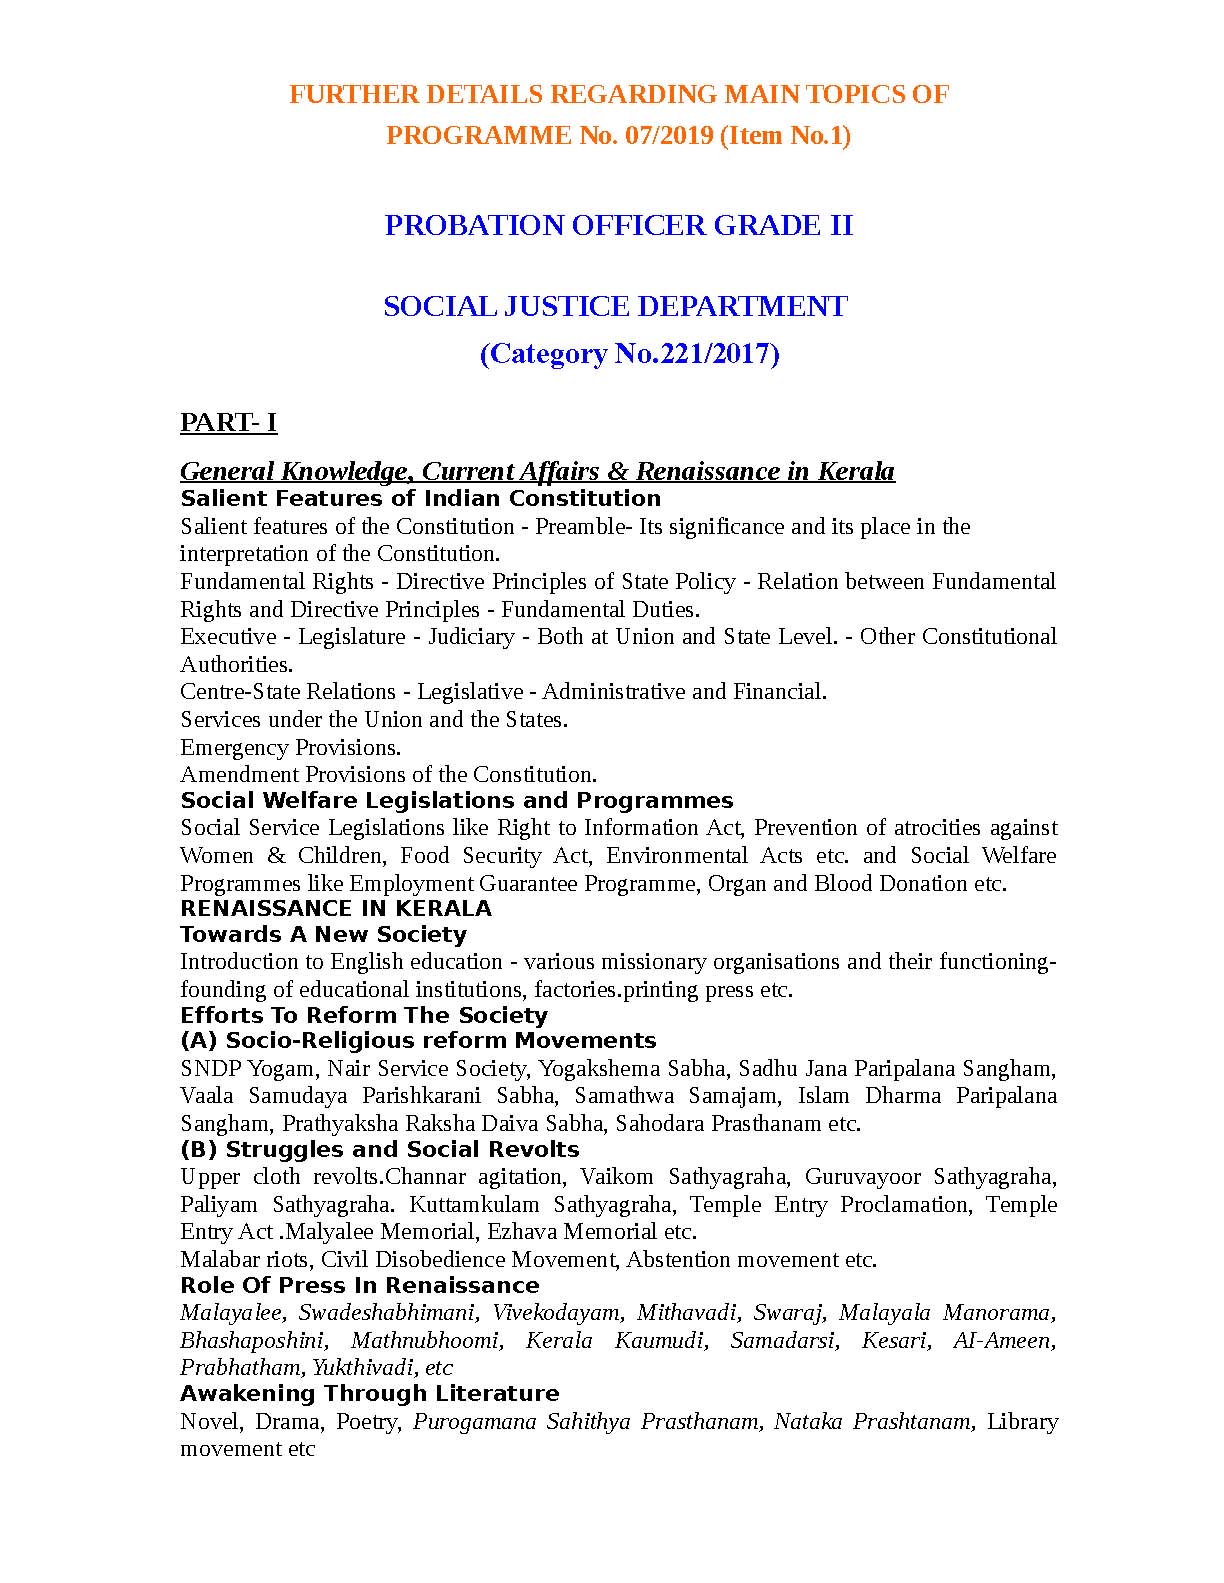 KPSC Exam Syllabus 2019 Probation Officer Grade II - Notification Image 1